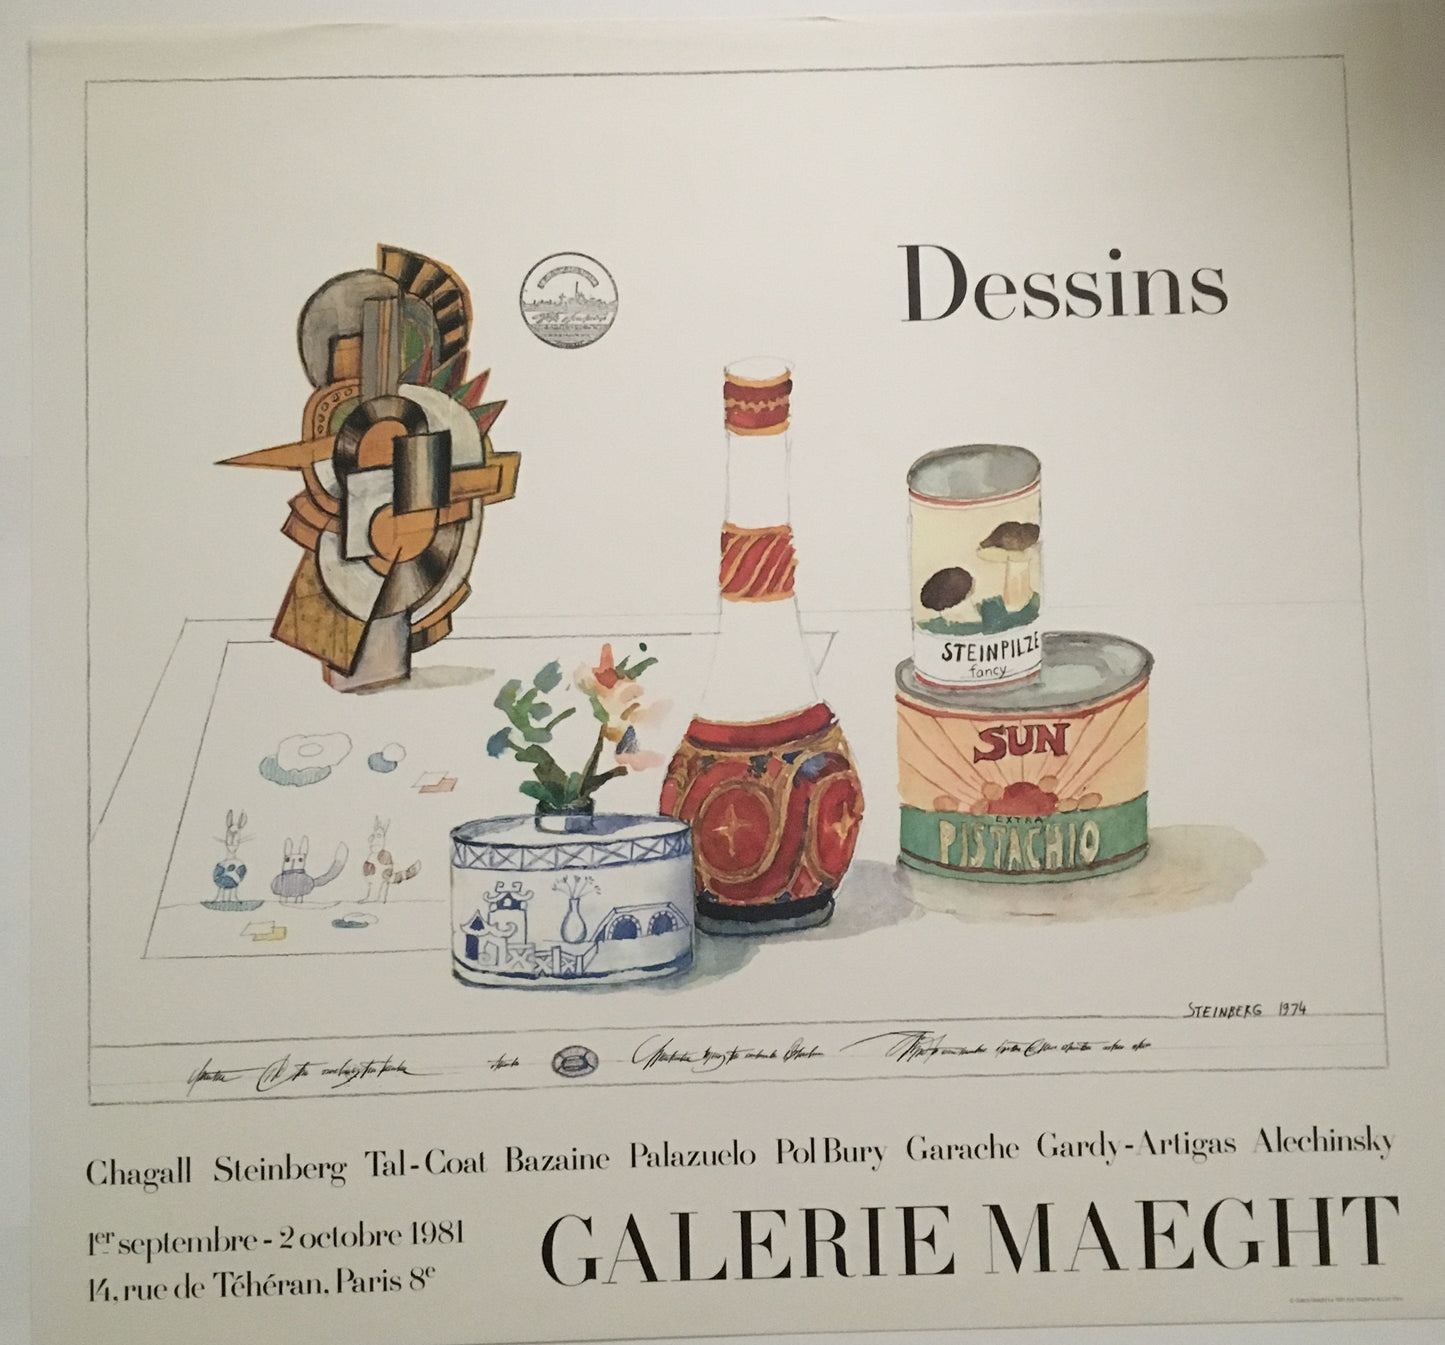 Saul Steinberg Dessins Galerie Maeght Poster 1981 (28.25w x 19.75t)